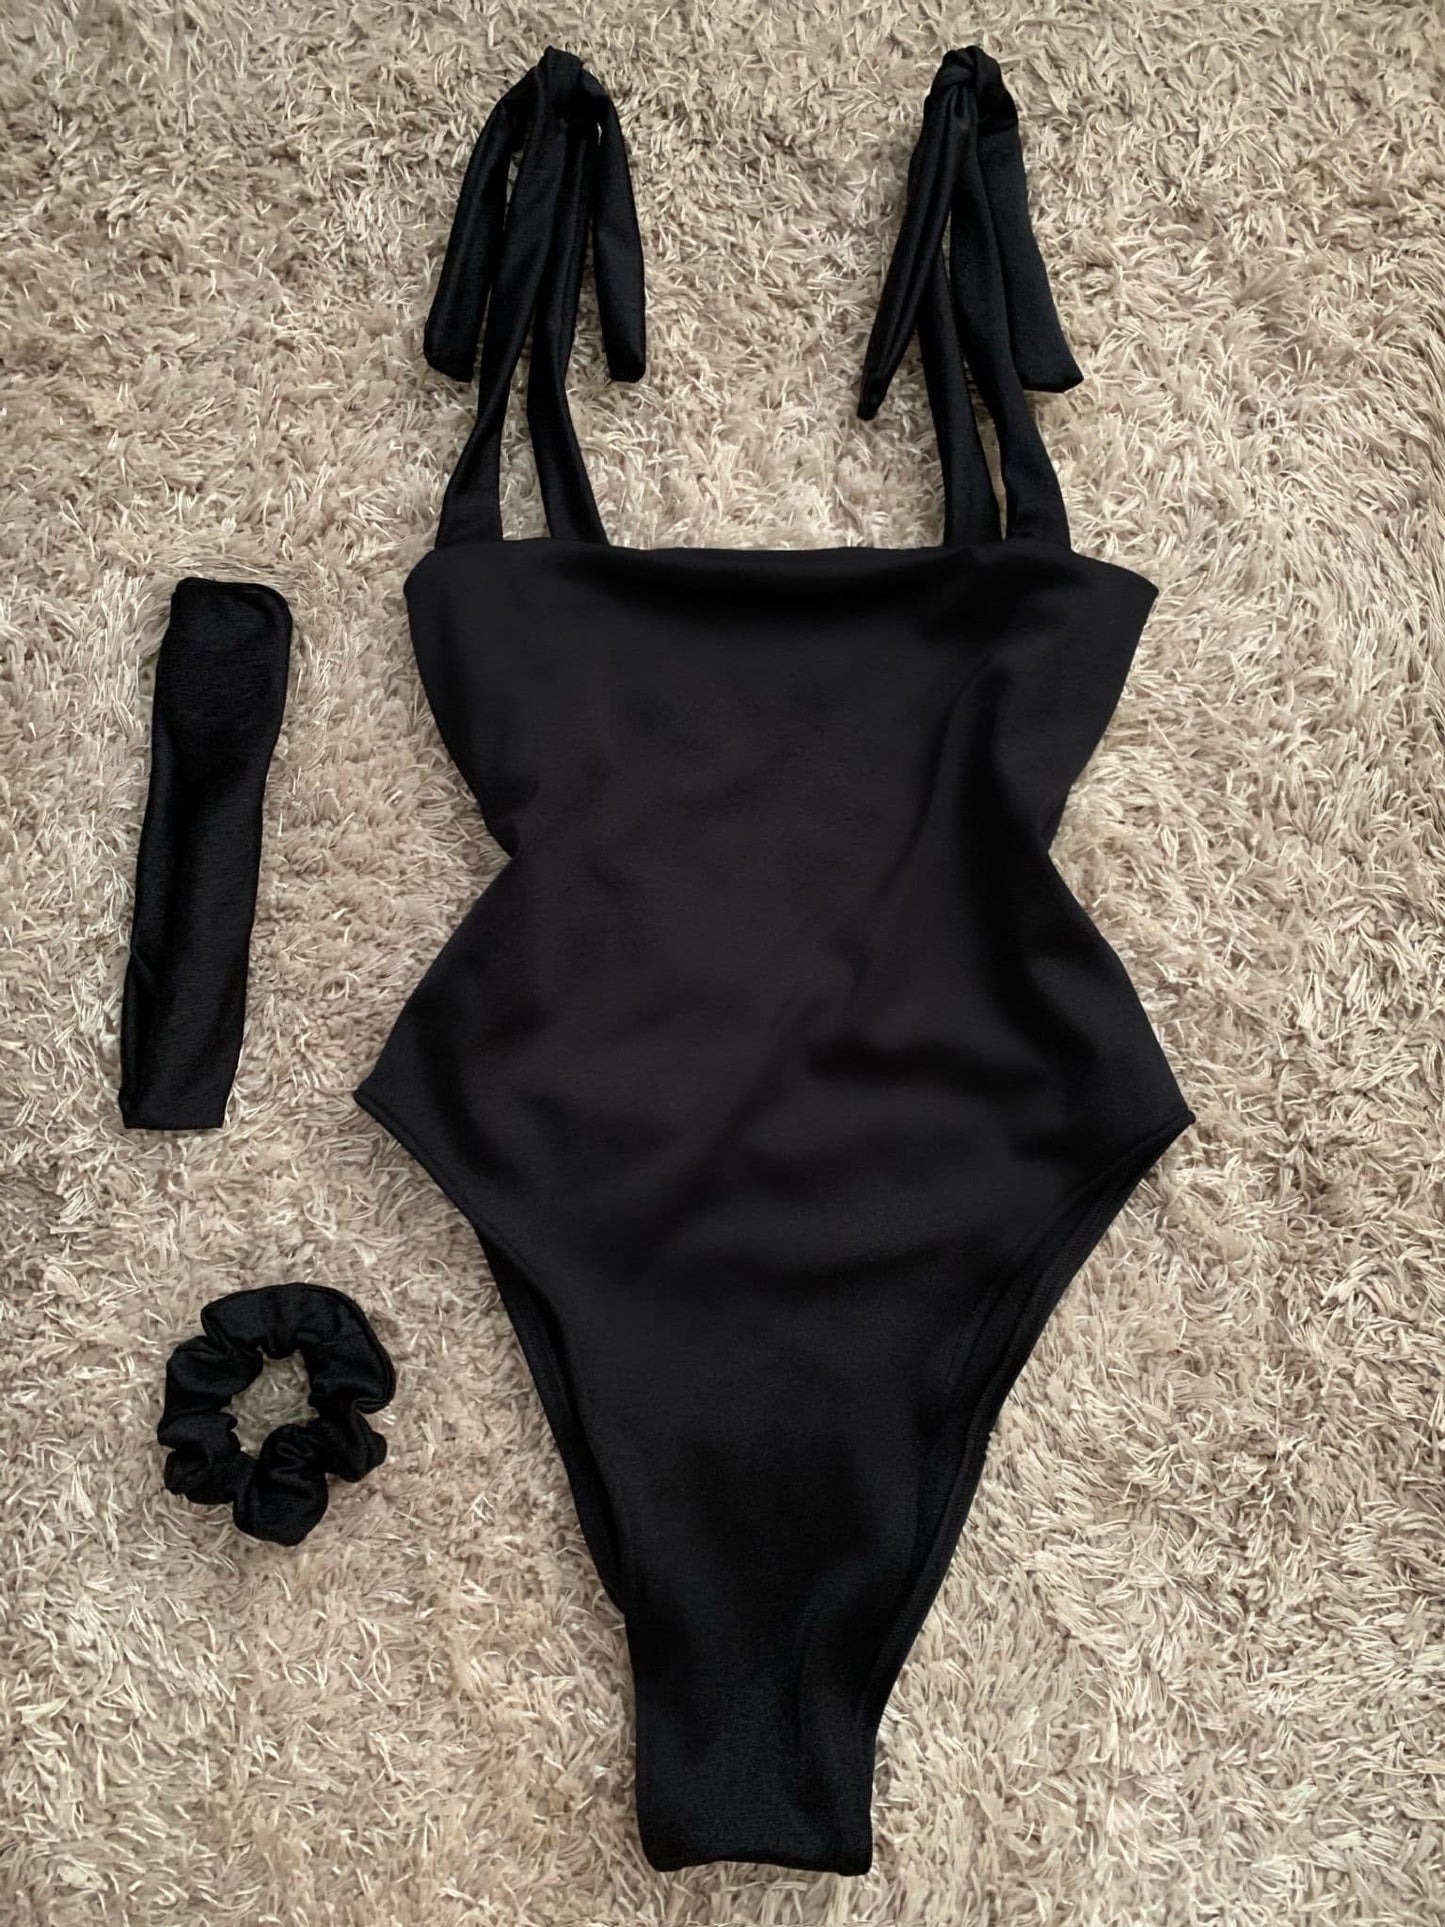 Black Swimsuit